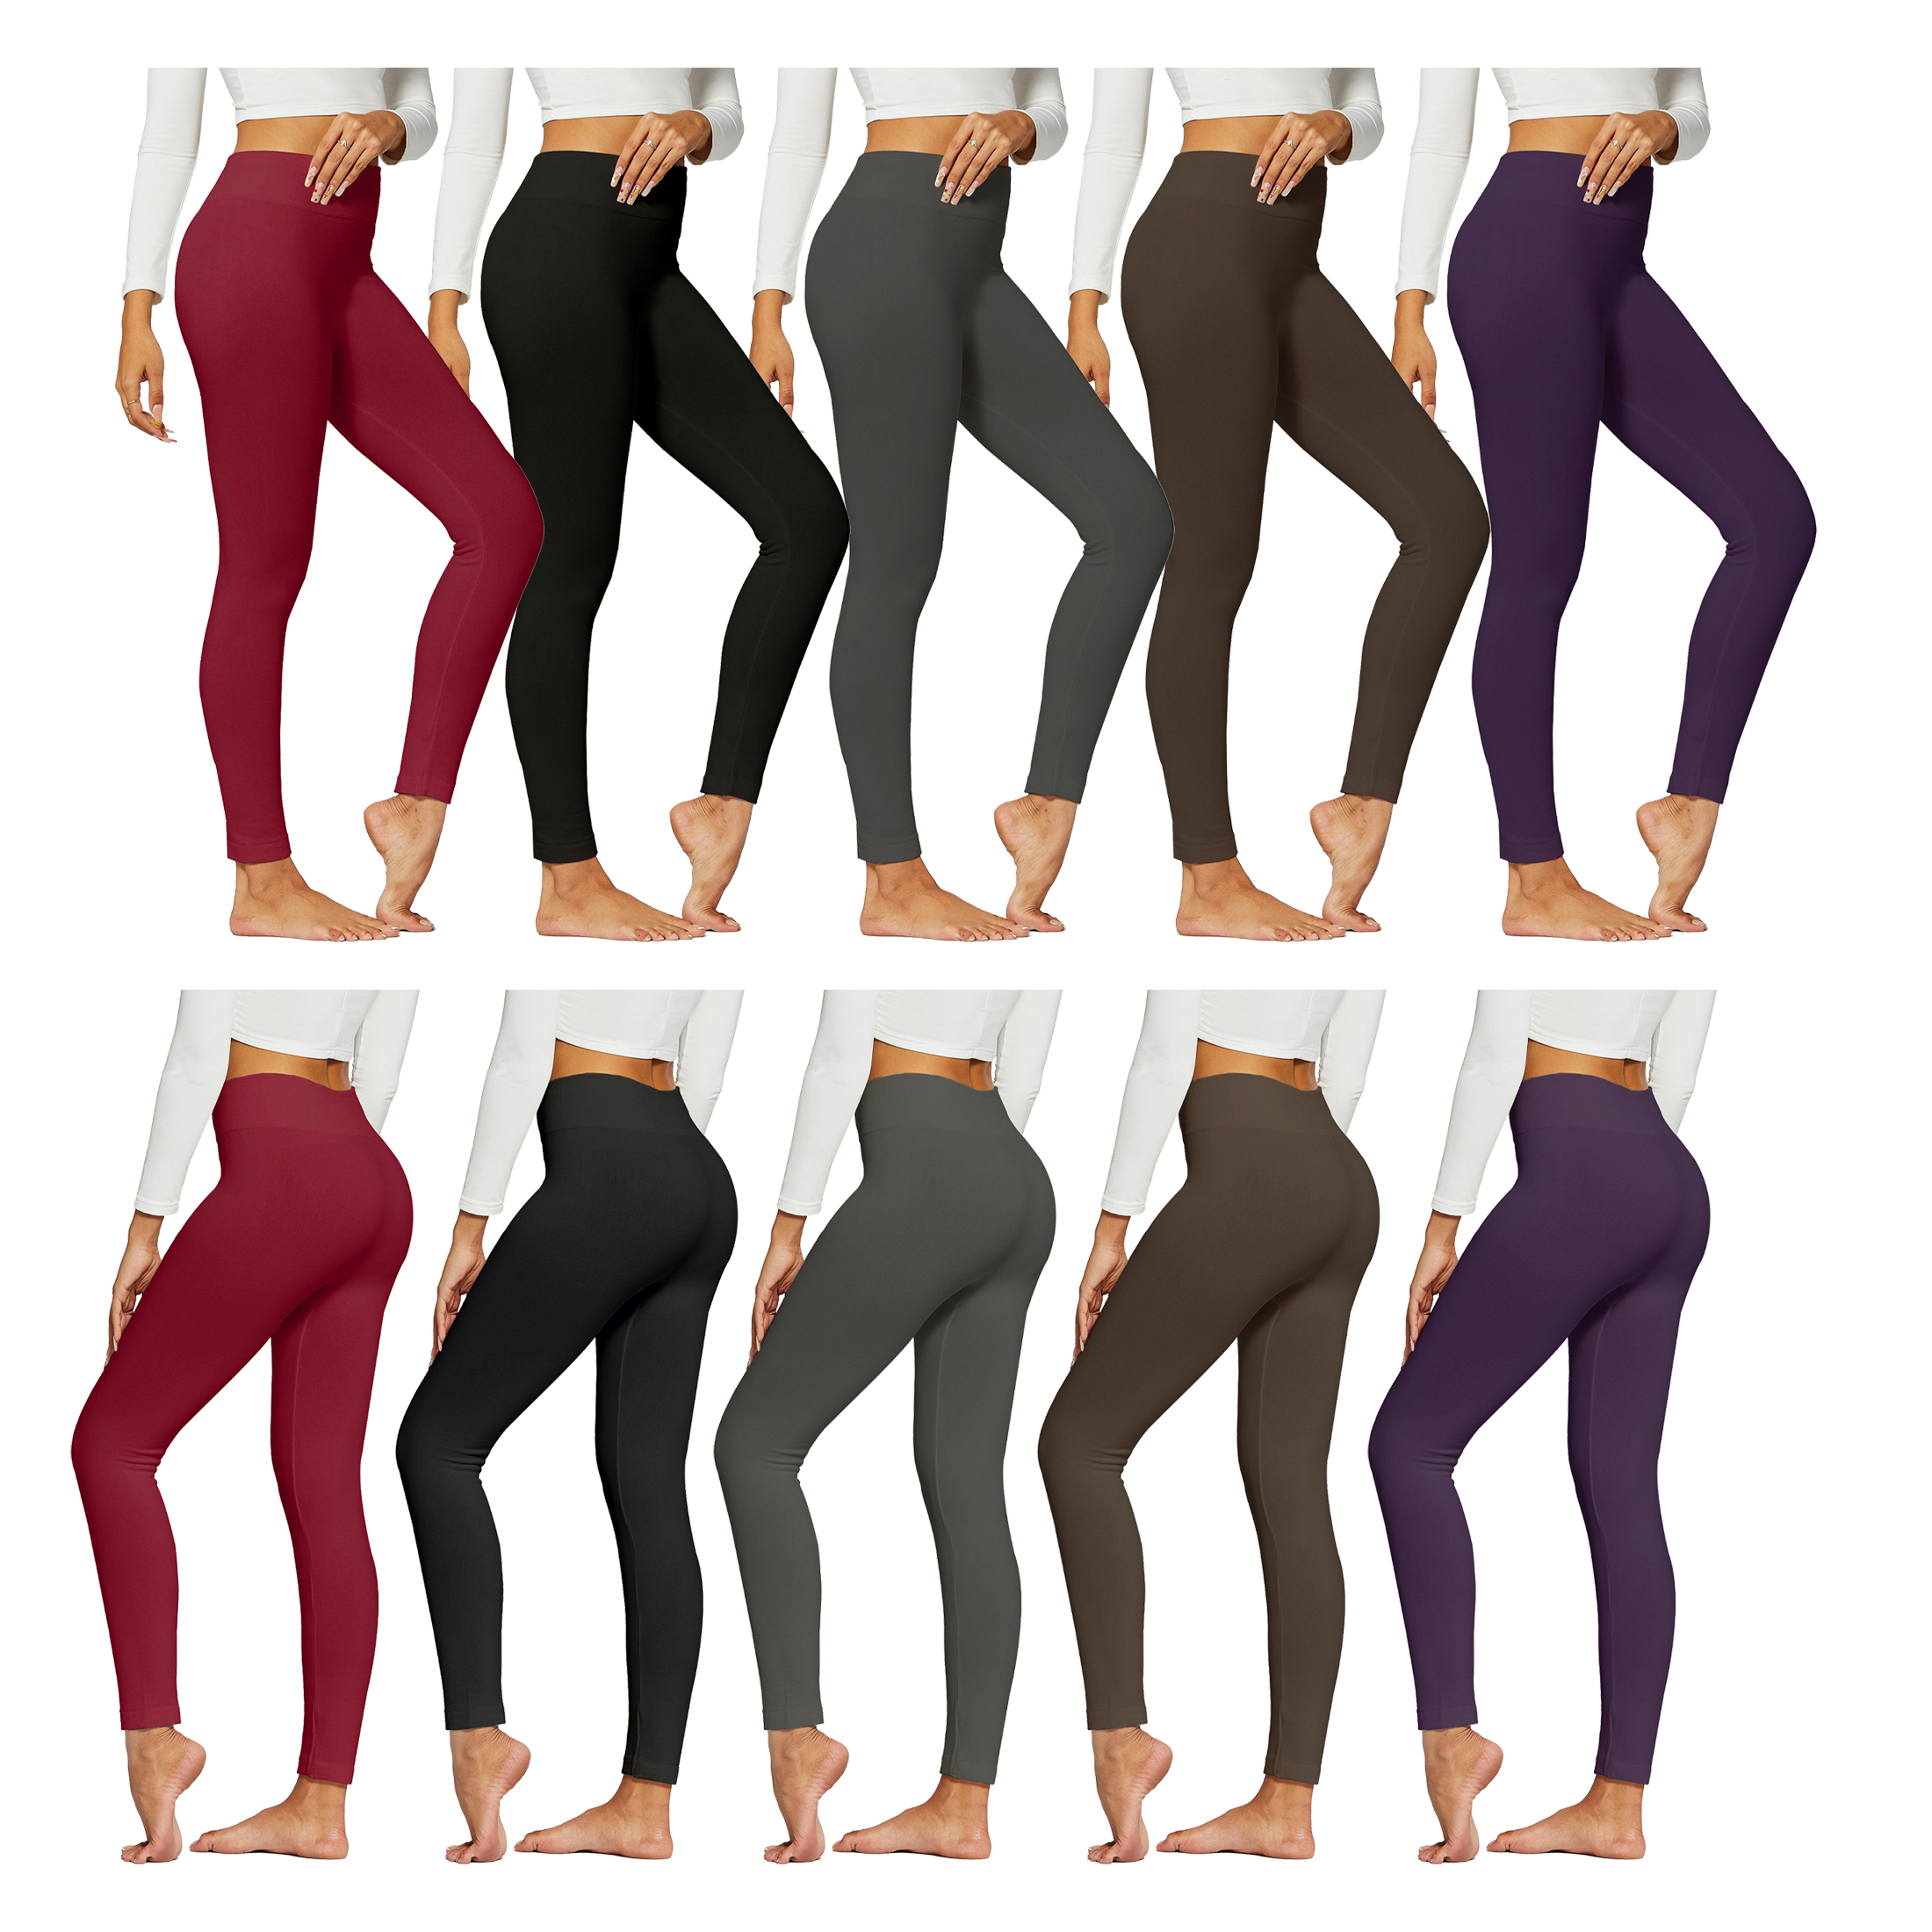 3-Pack:Women's Premium Quality High-Waist Fleece-Lined Leggings (Plus Size Available) - Black, Grey & Brown, 3X/4X